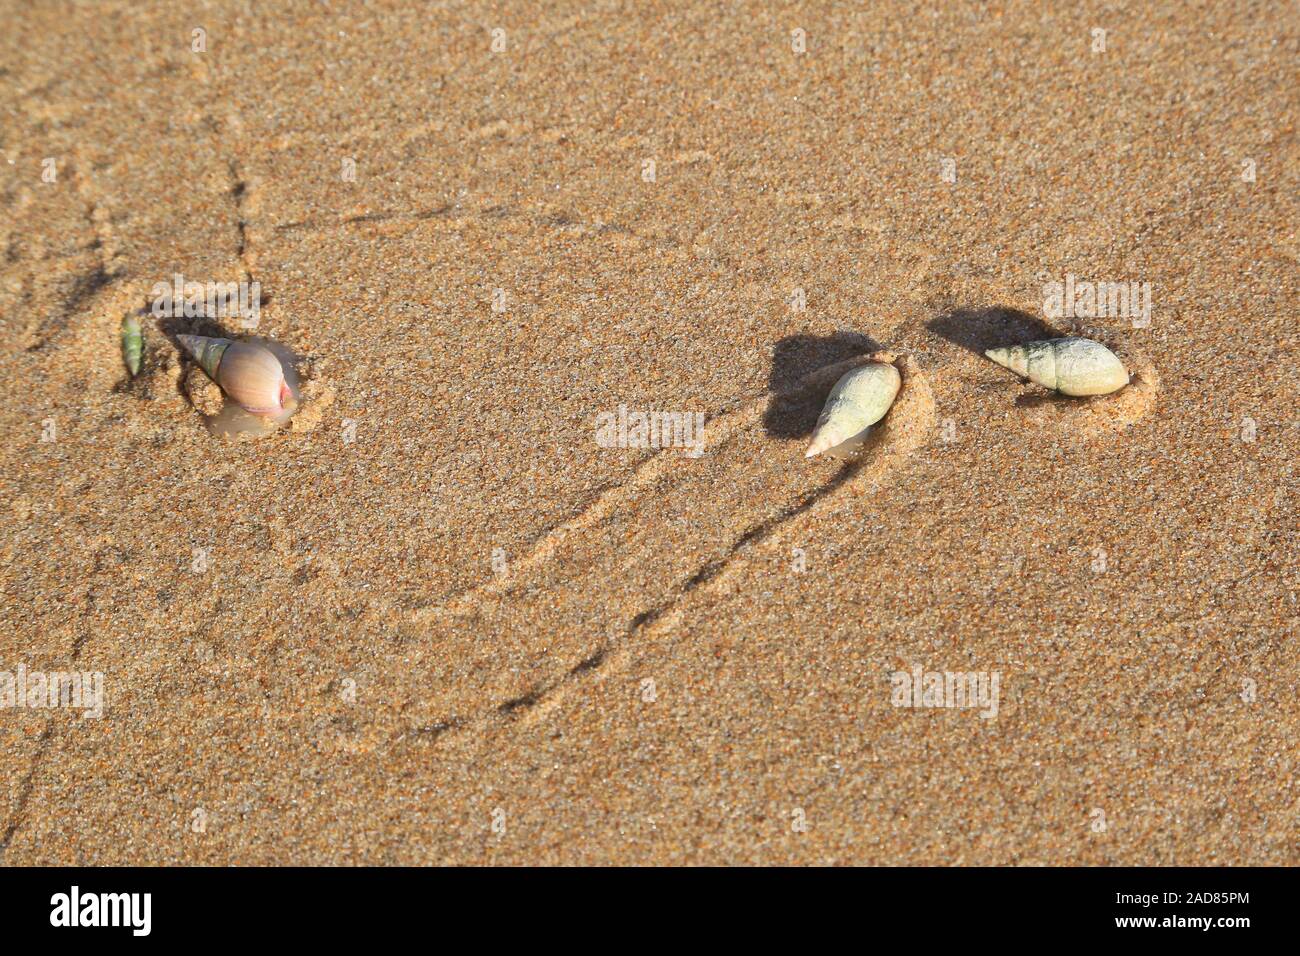 Plough snail, Finger plough snail, Bullia Digitalis, South Africa, Indian Ocean, Sea snail, Plough snail Stock Photo